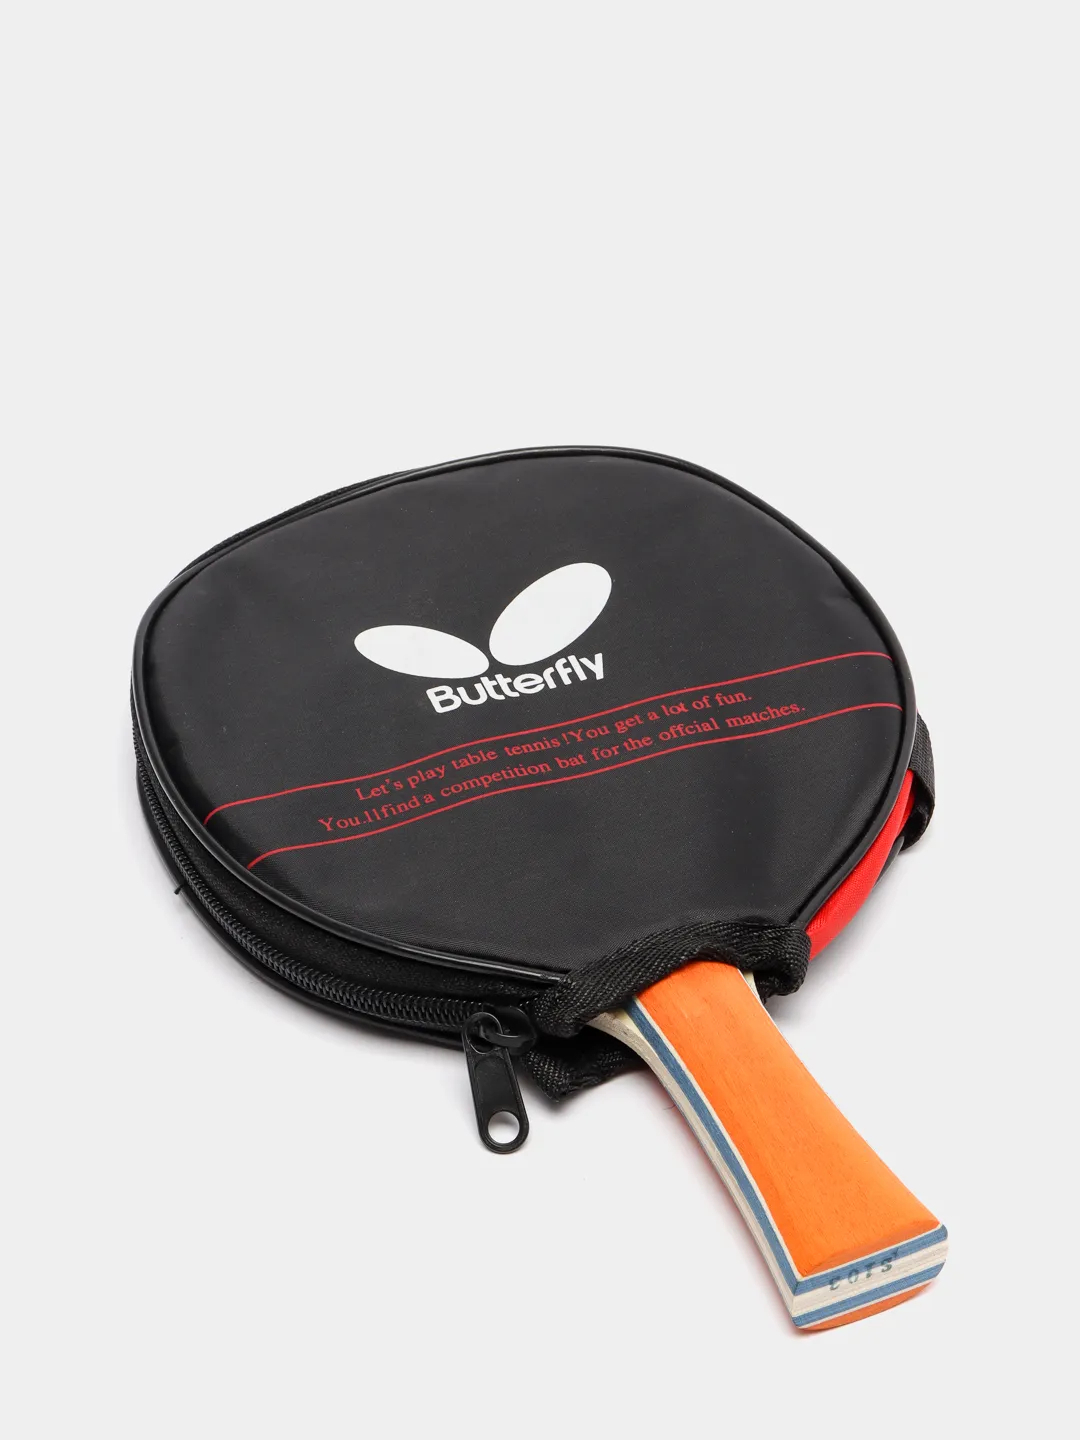 Чехол для ракетки настольного тенниса Butterfly за 315 ₽  в .